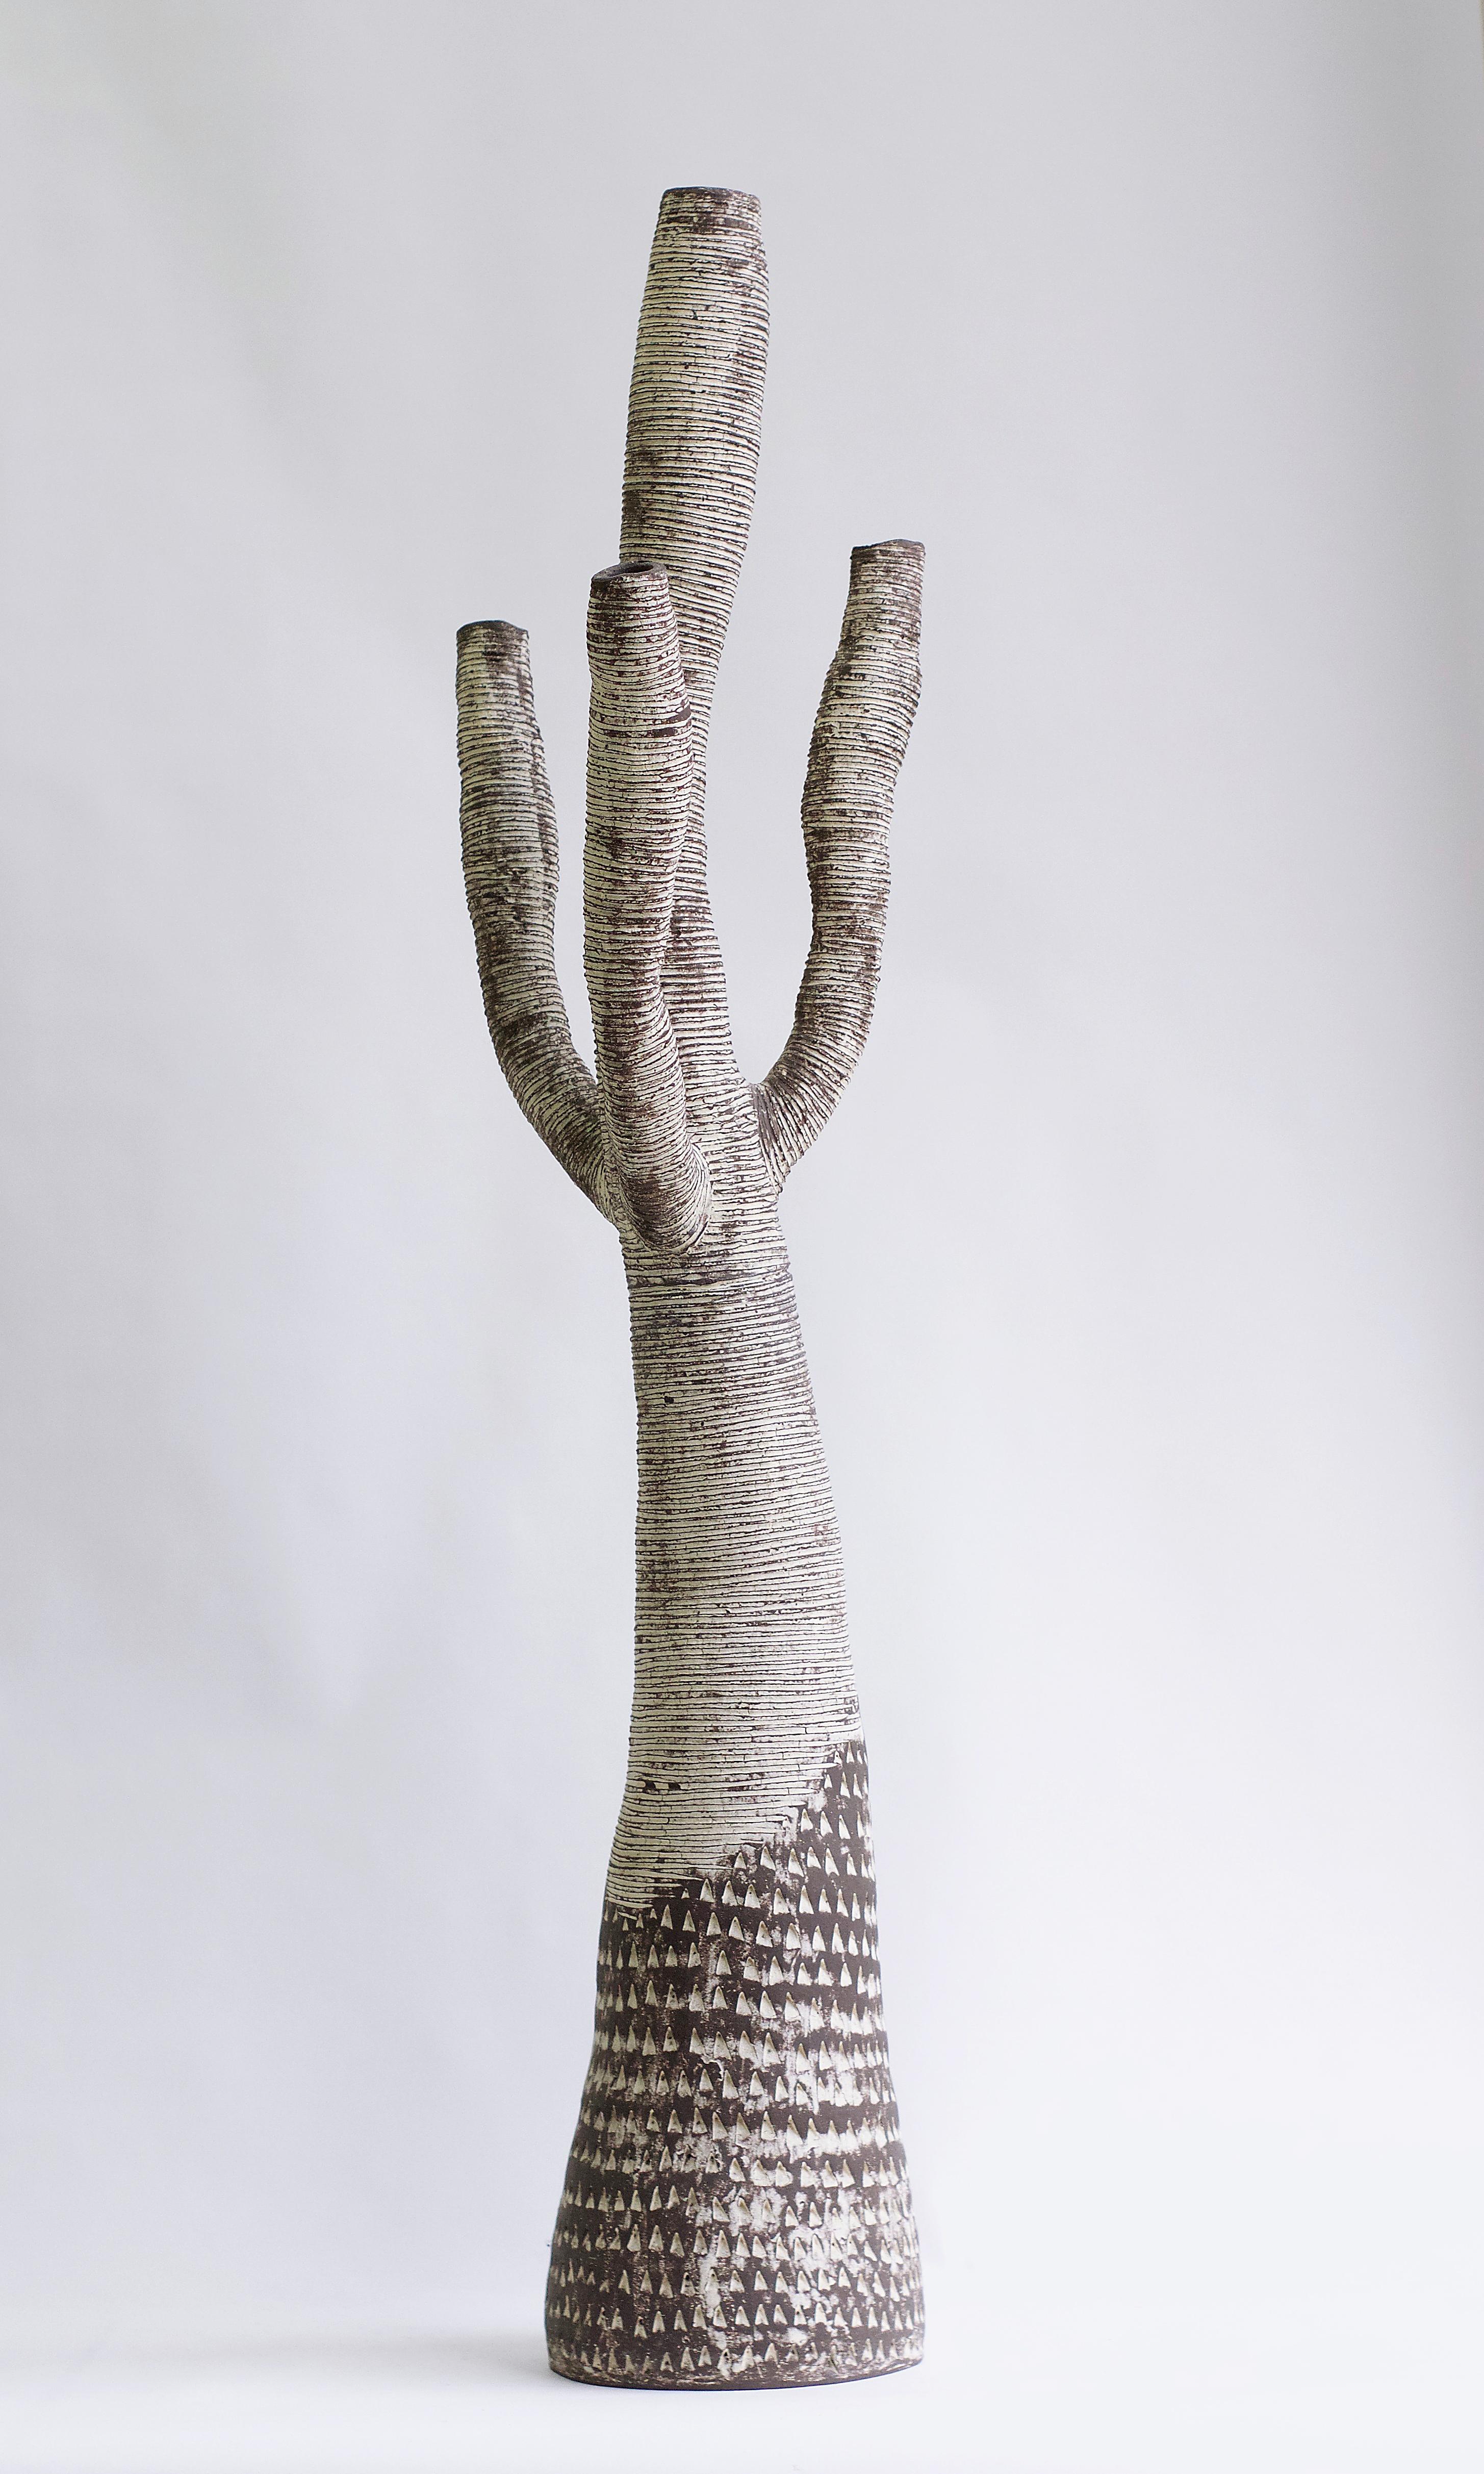 Minimalist Large Contemporary Ceramic Tree Sculpture, Arbre Motifs For Sale